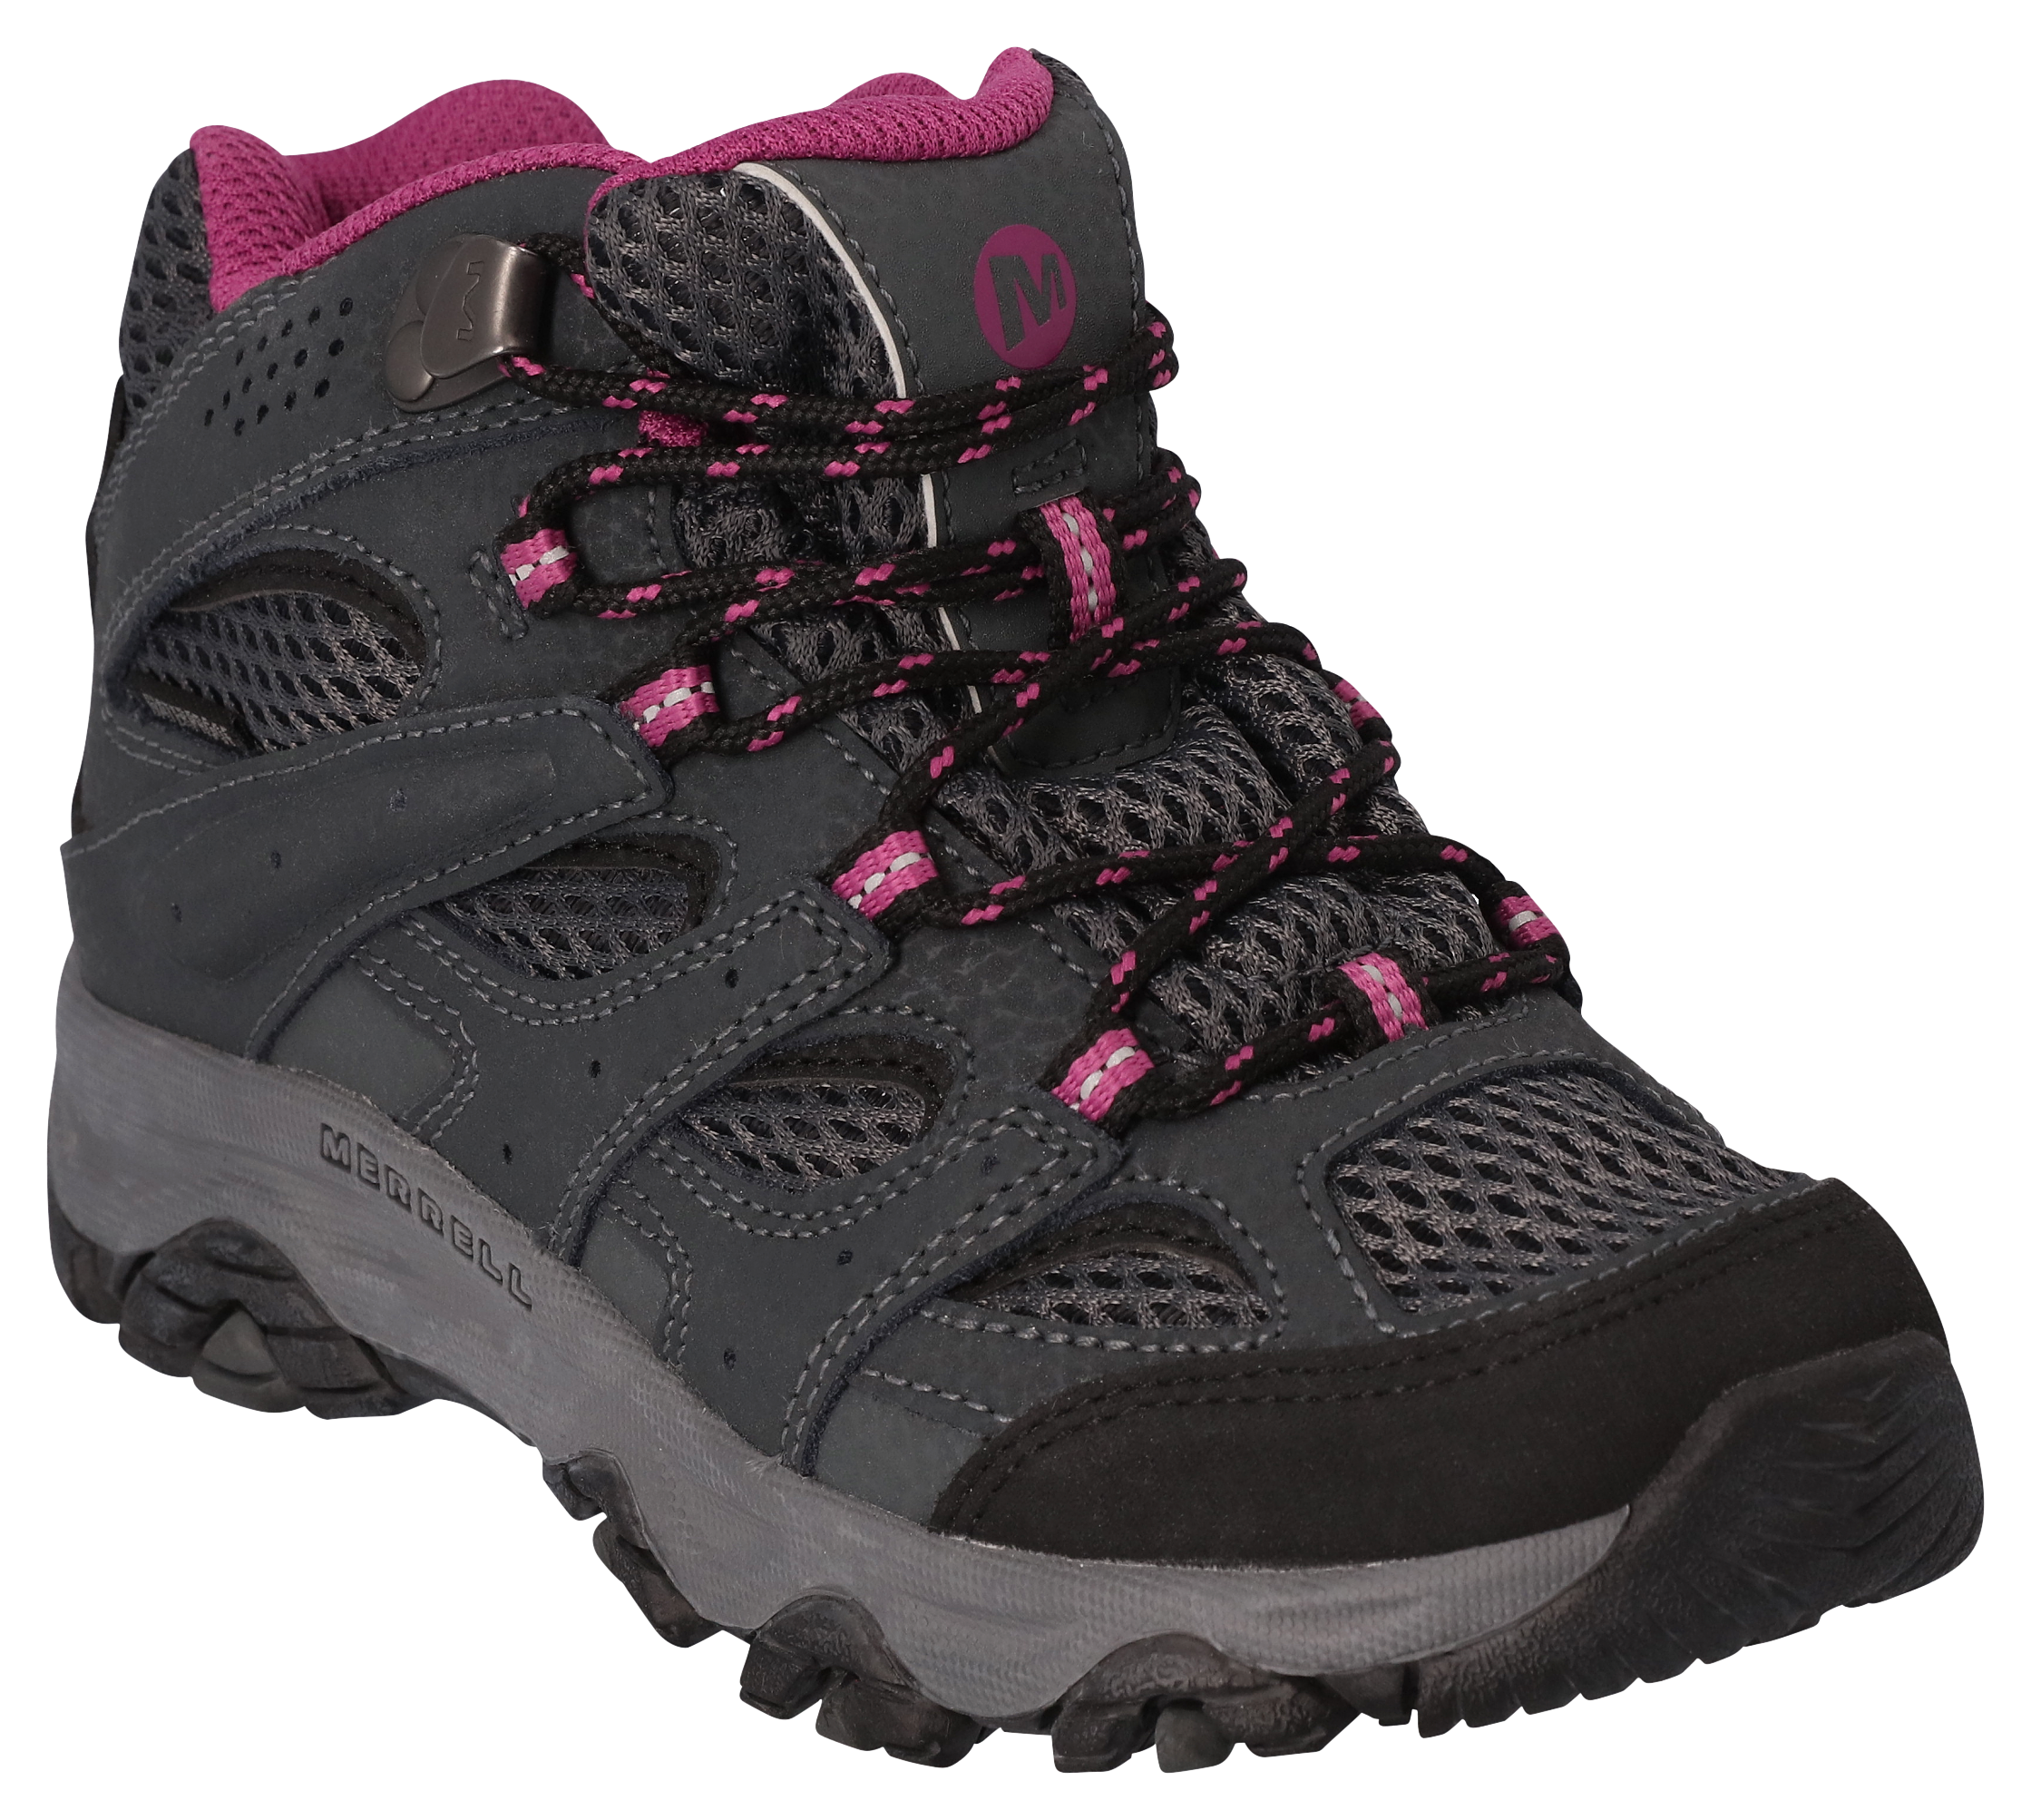 Merrell Moab III Mid Waterproof Hiking Boots for Kids - Granite - 2 Kids